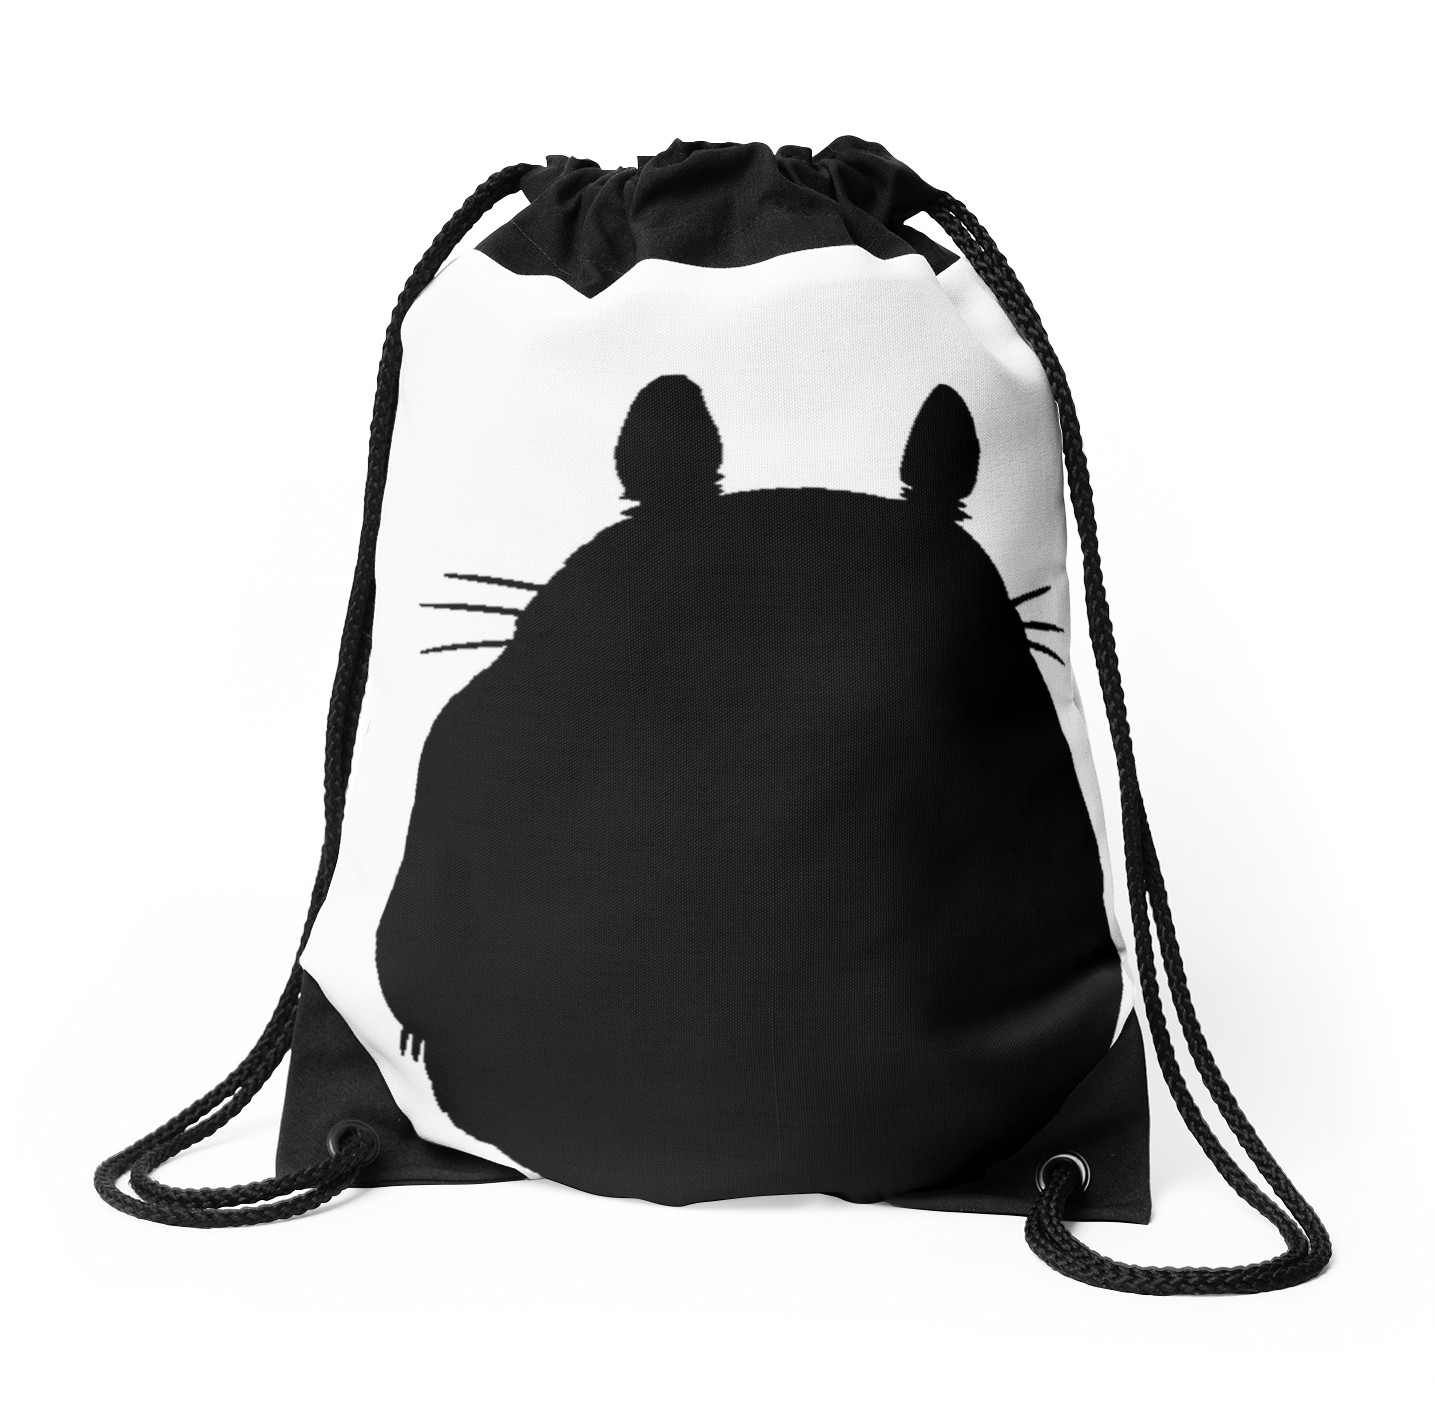 Totoro Silhouette at GetDrawings | Free download